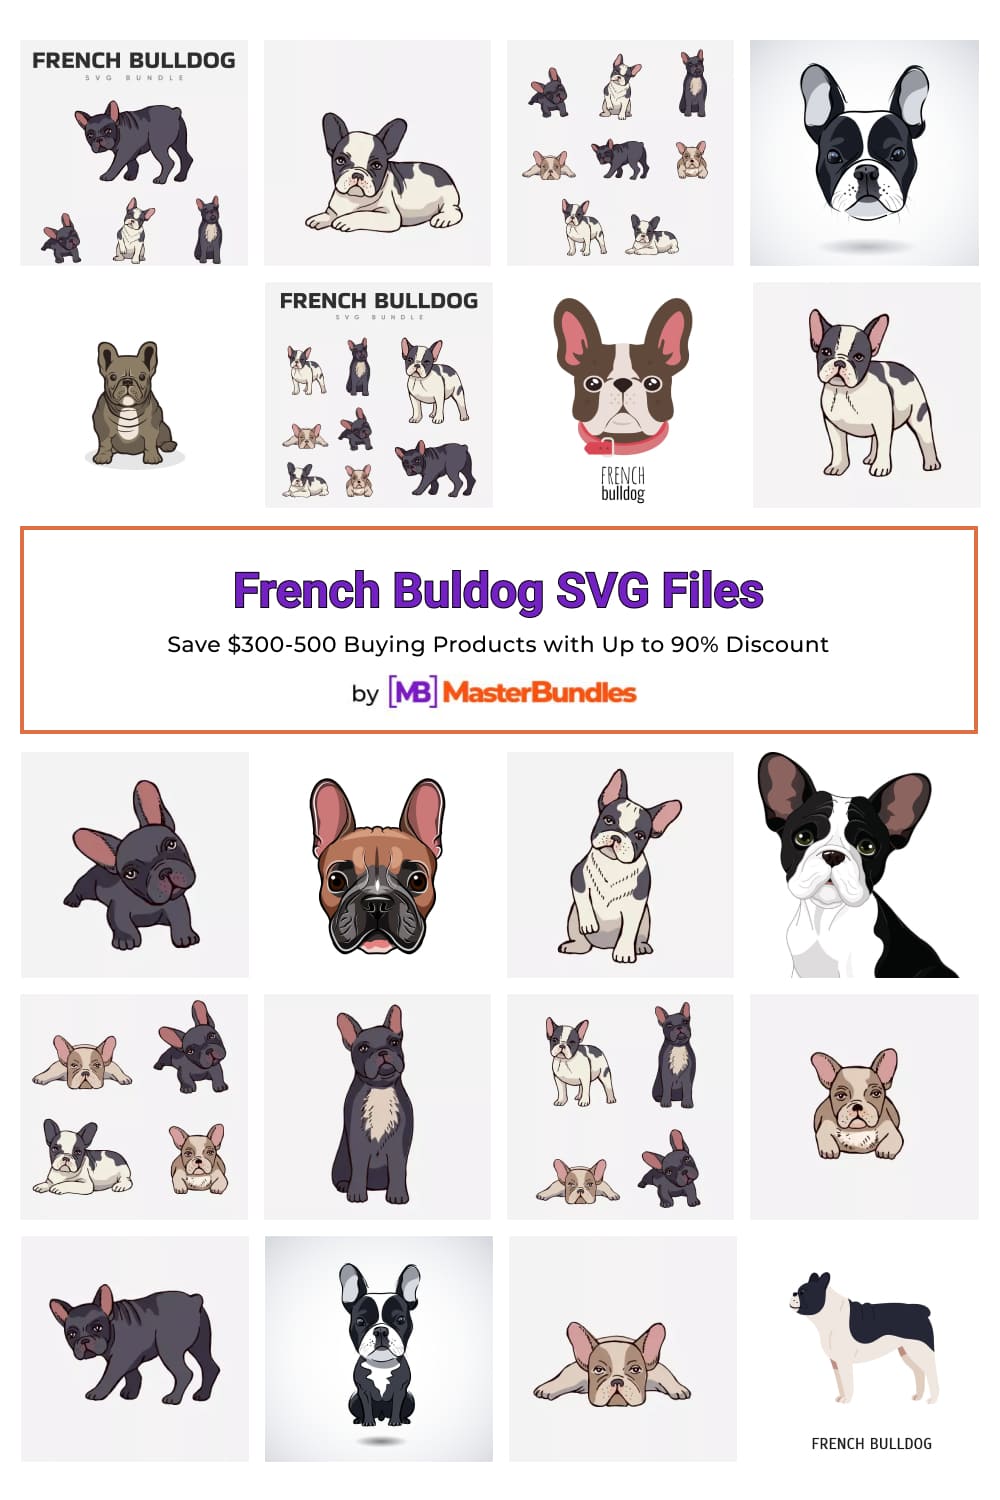 French Buldog SVG Files for Pinterest.